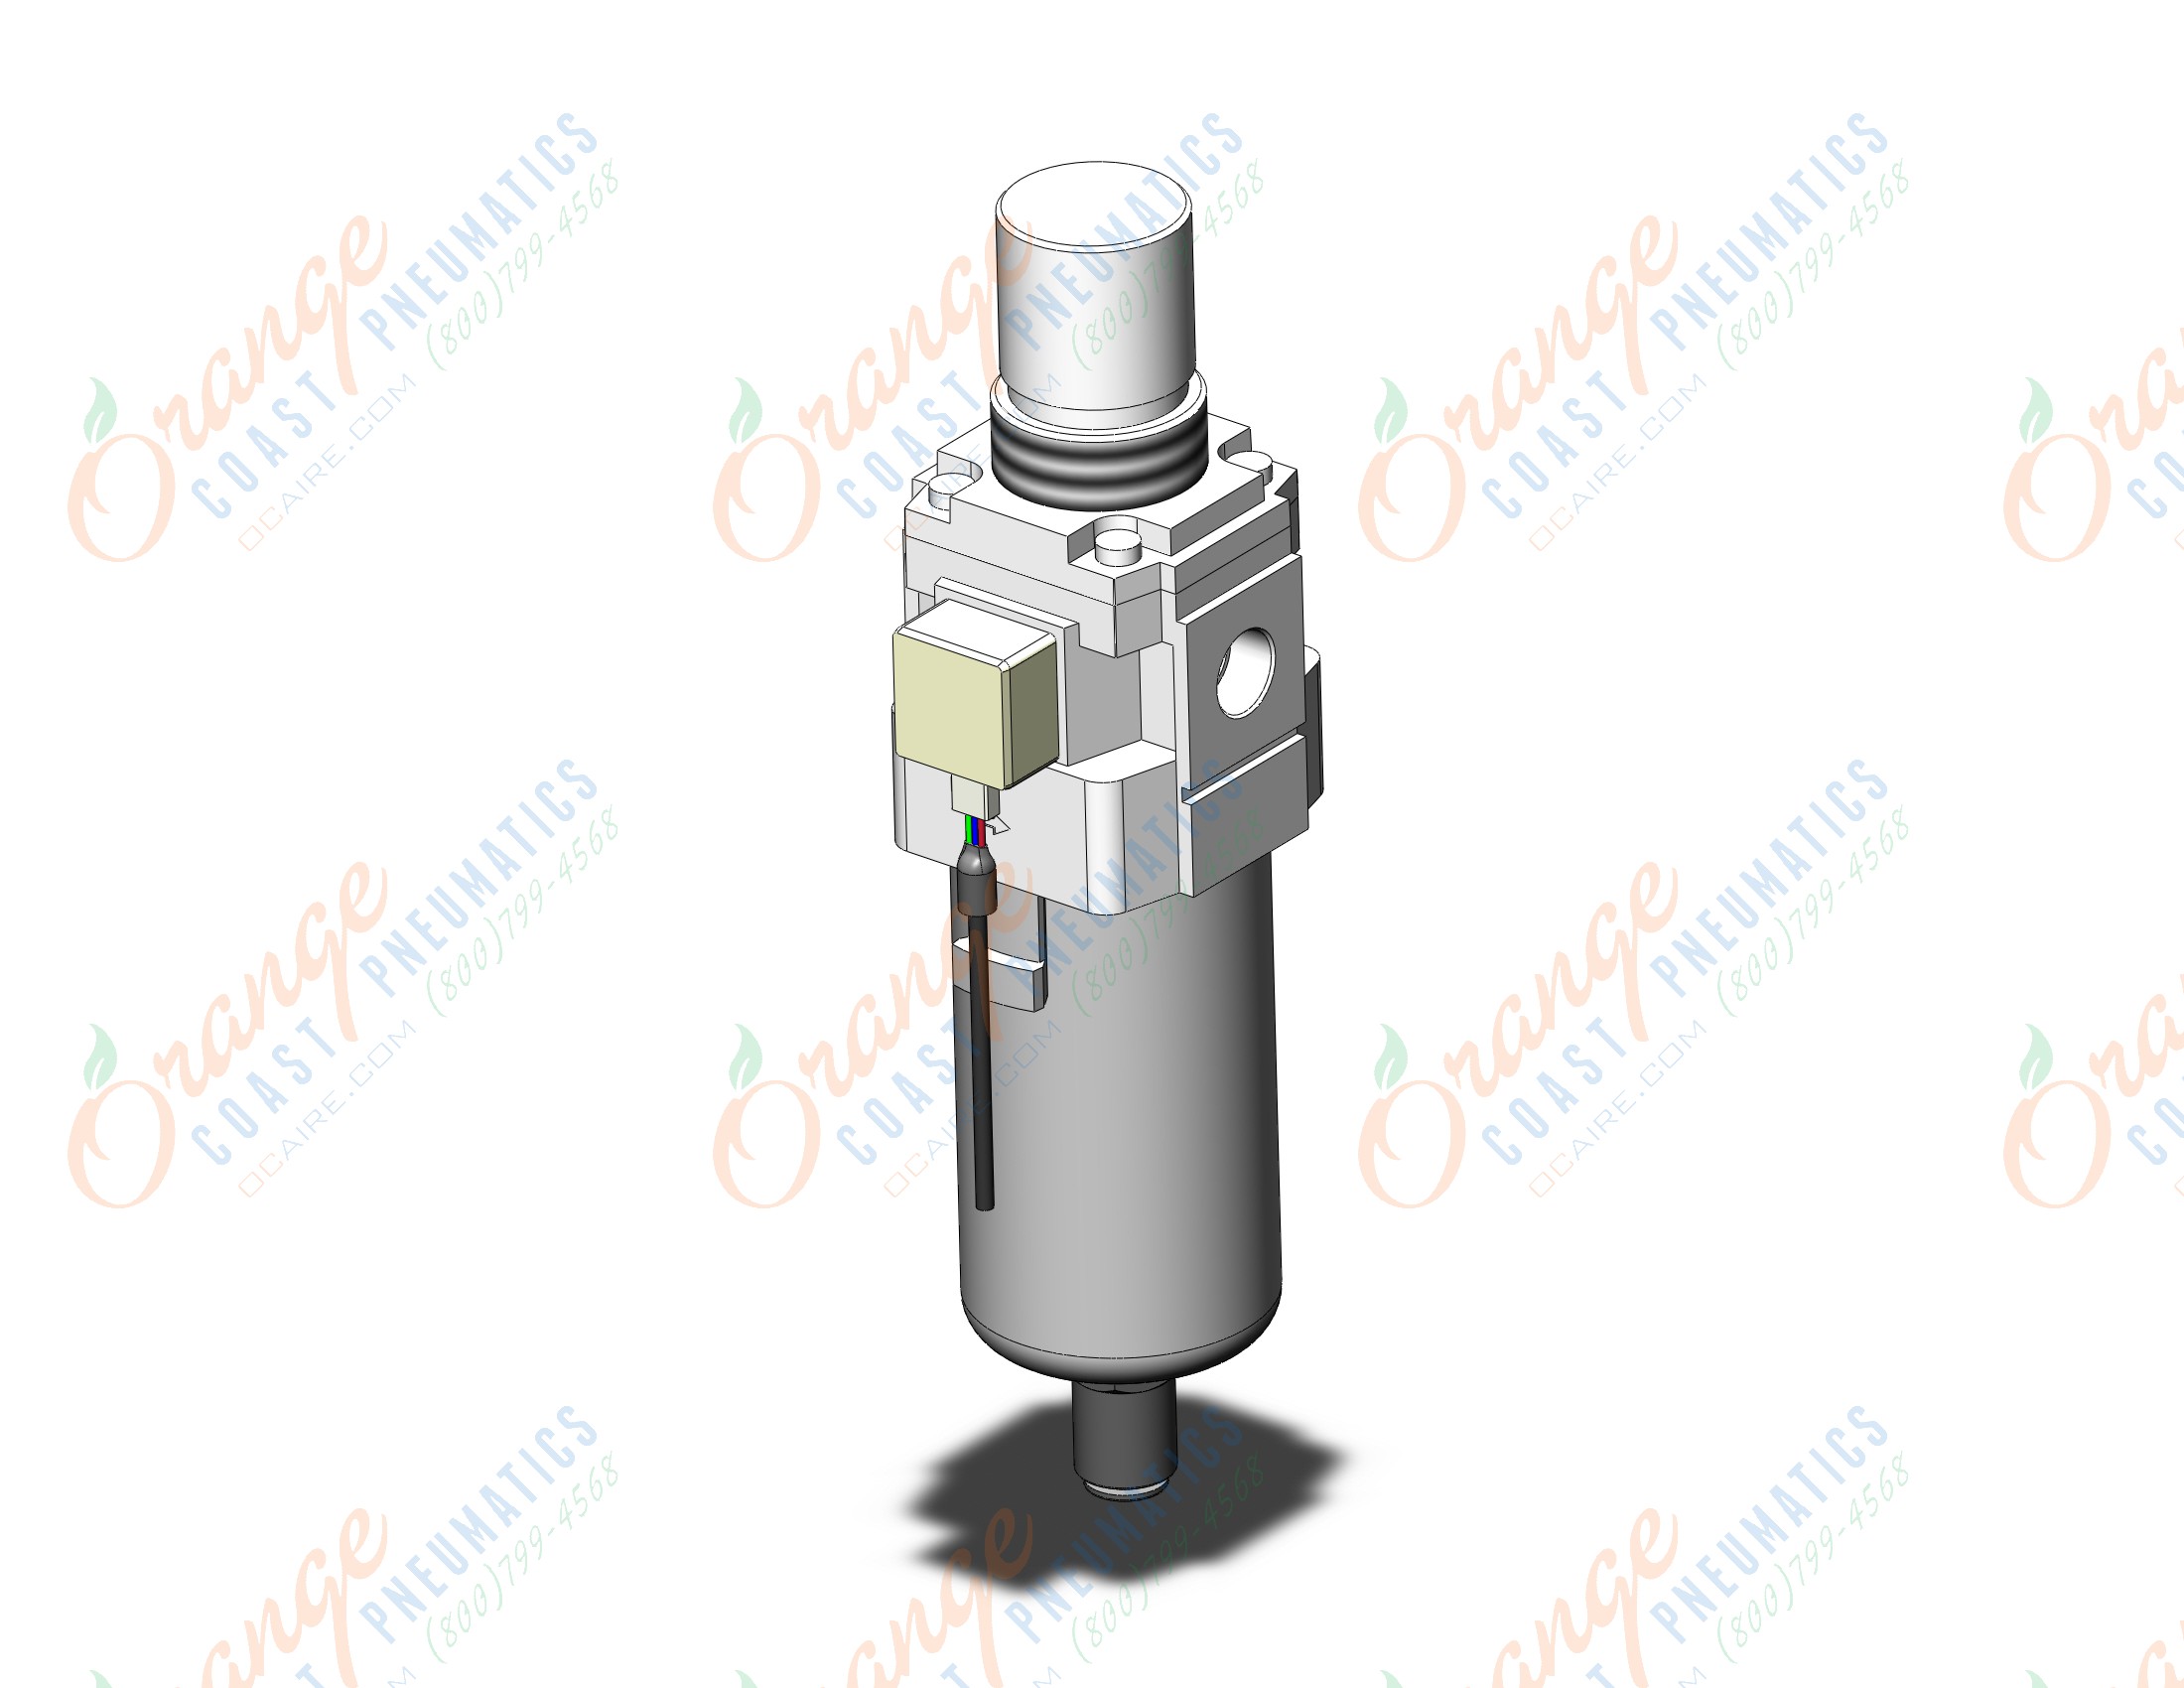 SMC AW40K-N03CE3-Z-B filter/regulator, FILTER/REGULATOR, MODULAR F.R.L.